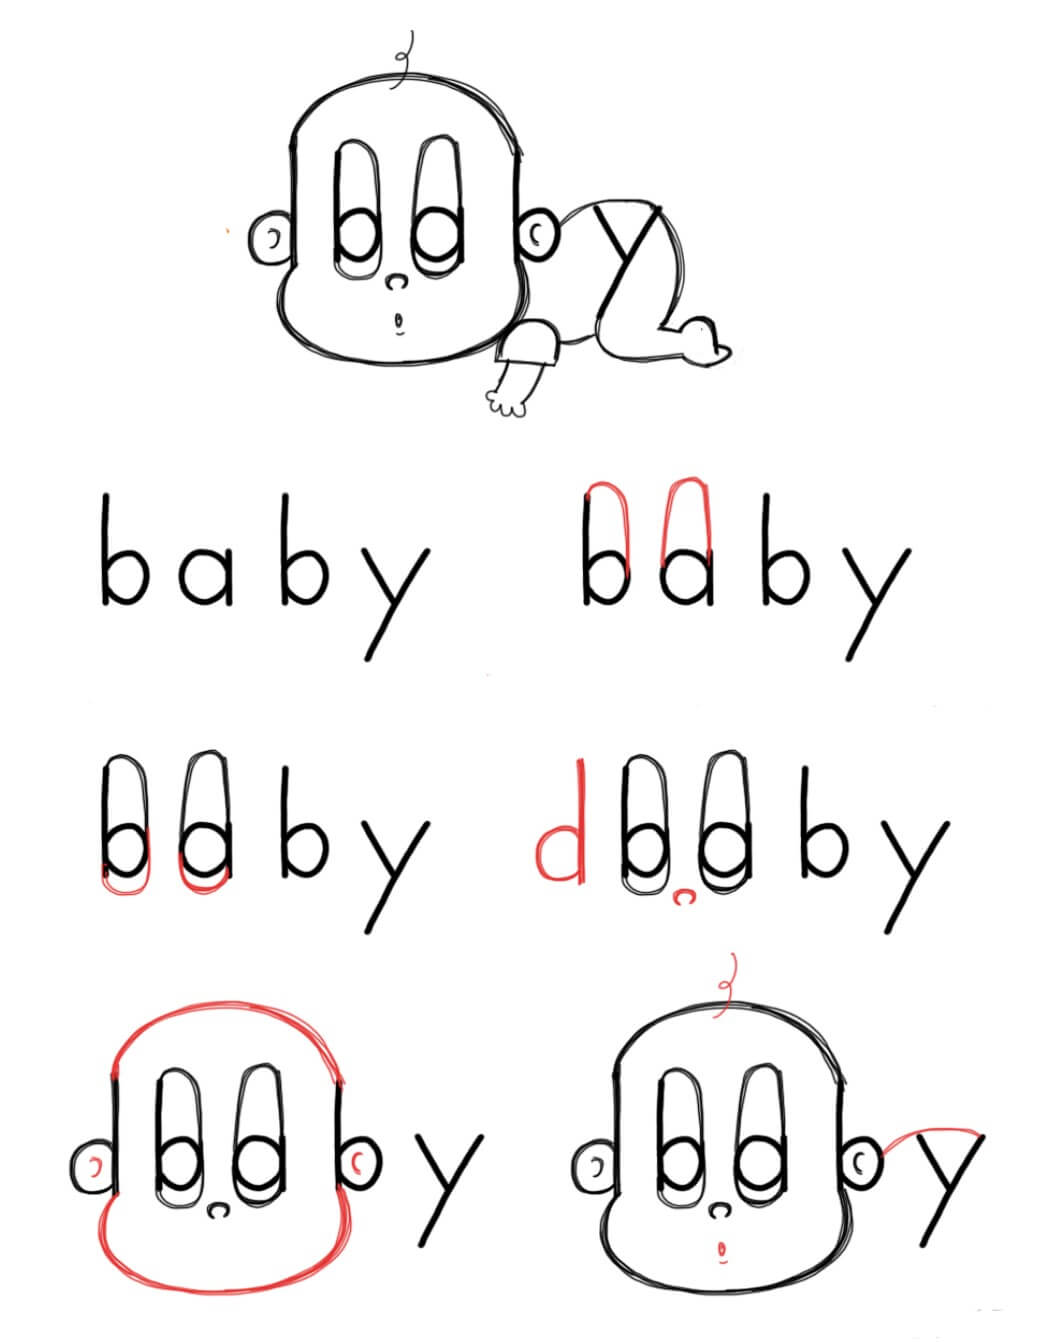 Baby idea (8) Drawing Ideas